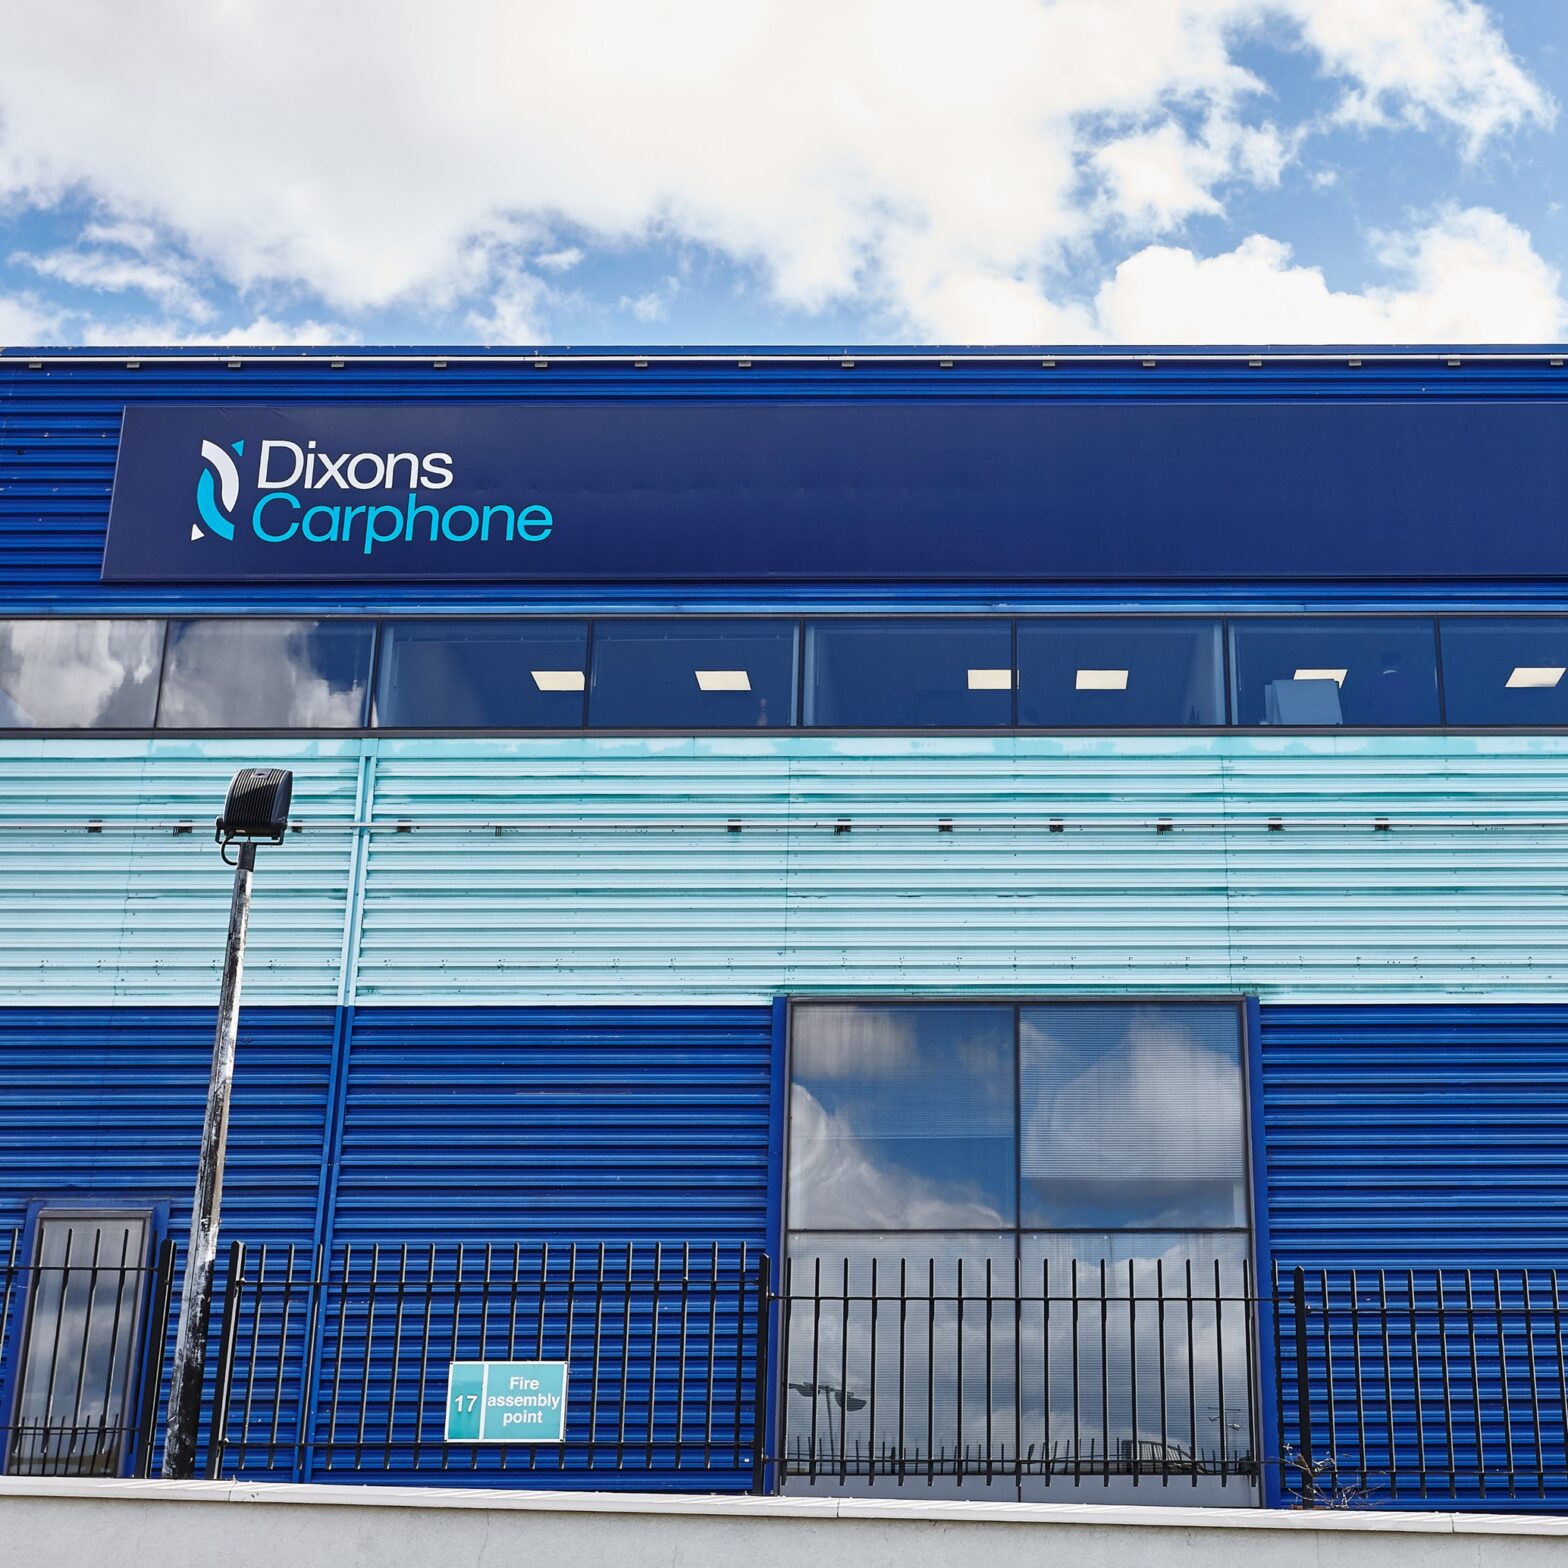 Tamlite Dixons Carphone building exterior sign in blue feature image